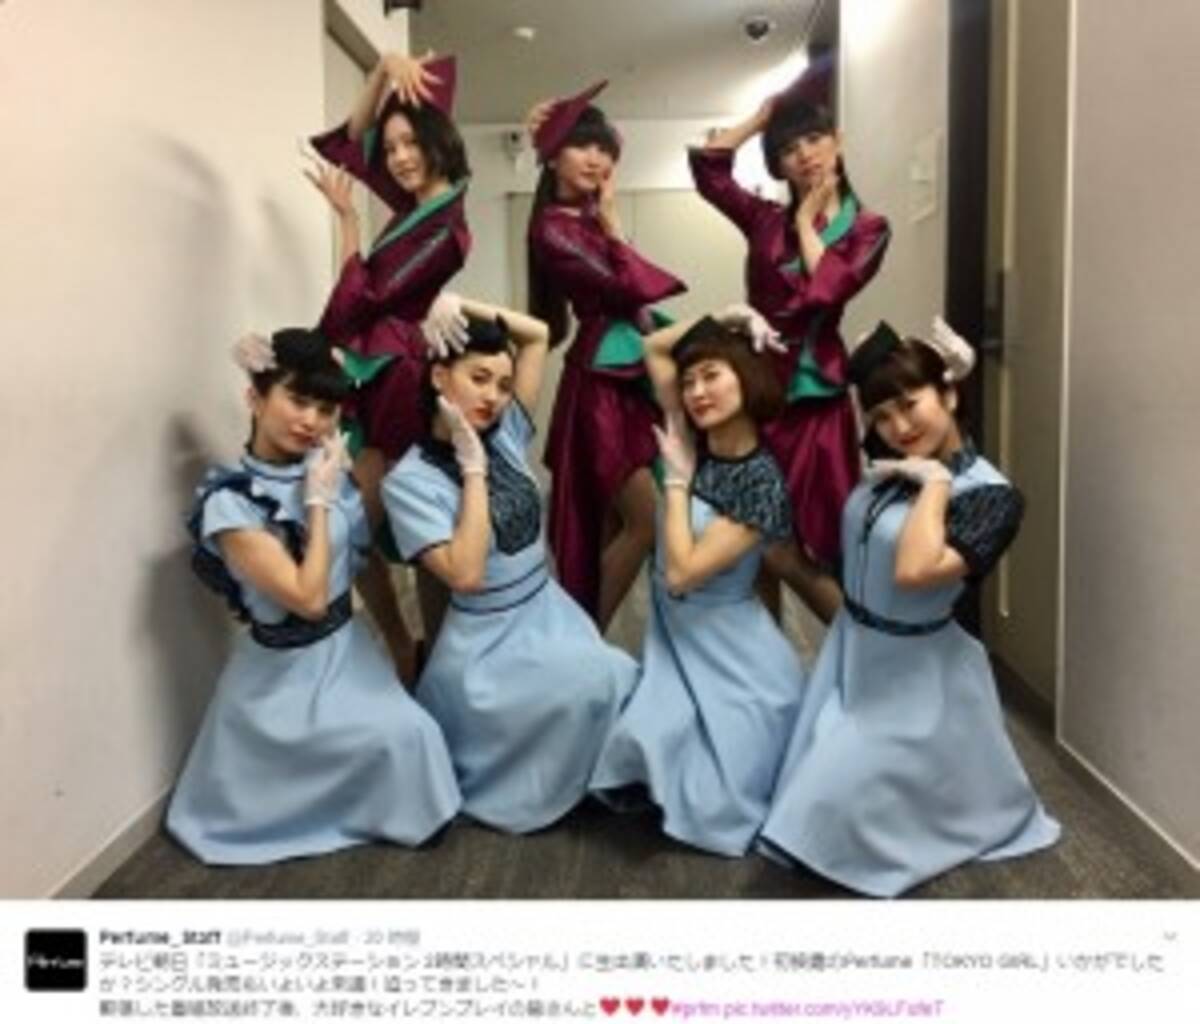 Perfume Elevenplay 振付師 Mikiko 先生つながりのコラボショット 17年2月11日 エキサイトニュース